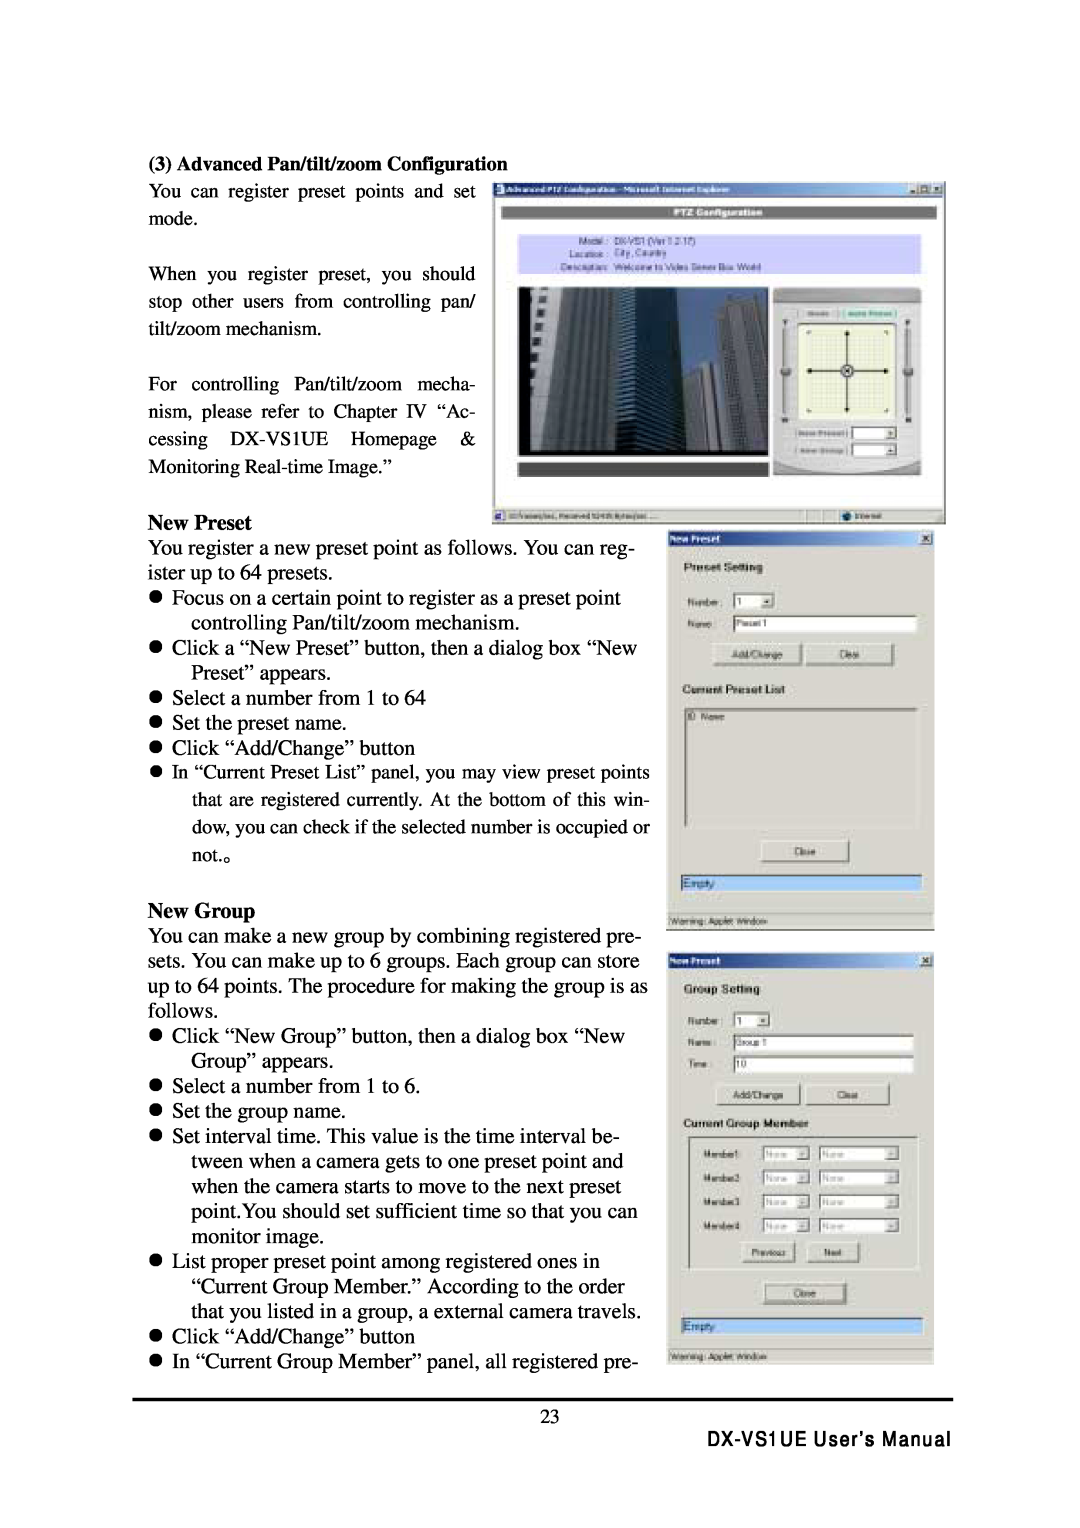 Mitsubishi Electronics DX-VS1 user manual New Preset, New Group 